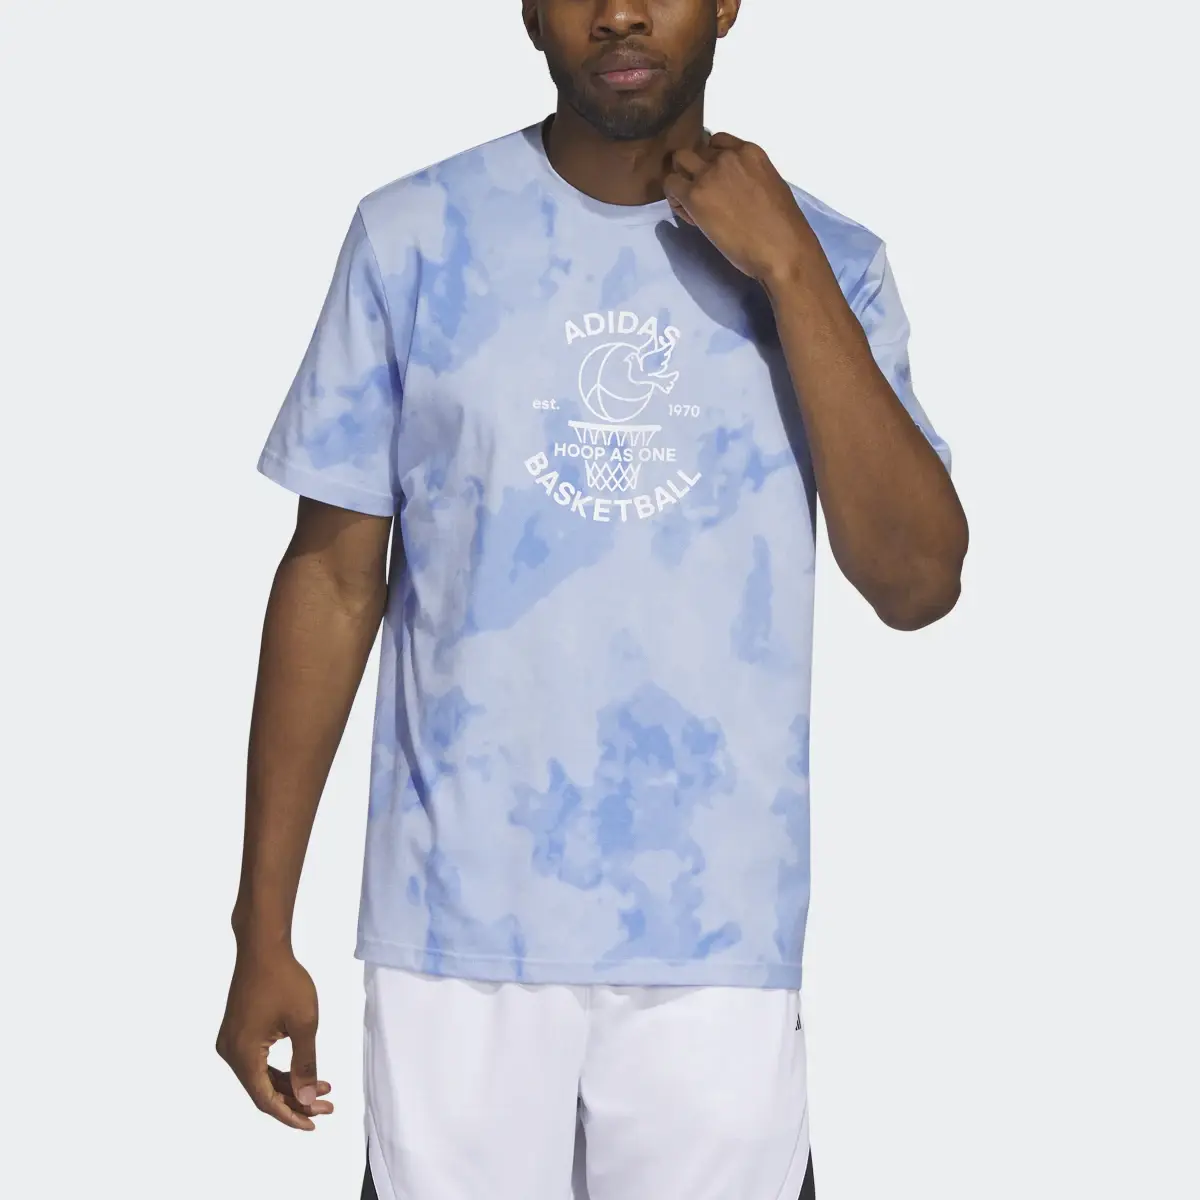 Adidas T-shirt Worldwide Hoops Basketball Graphic. 1